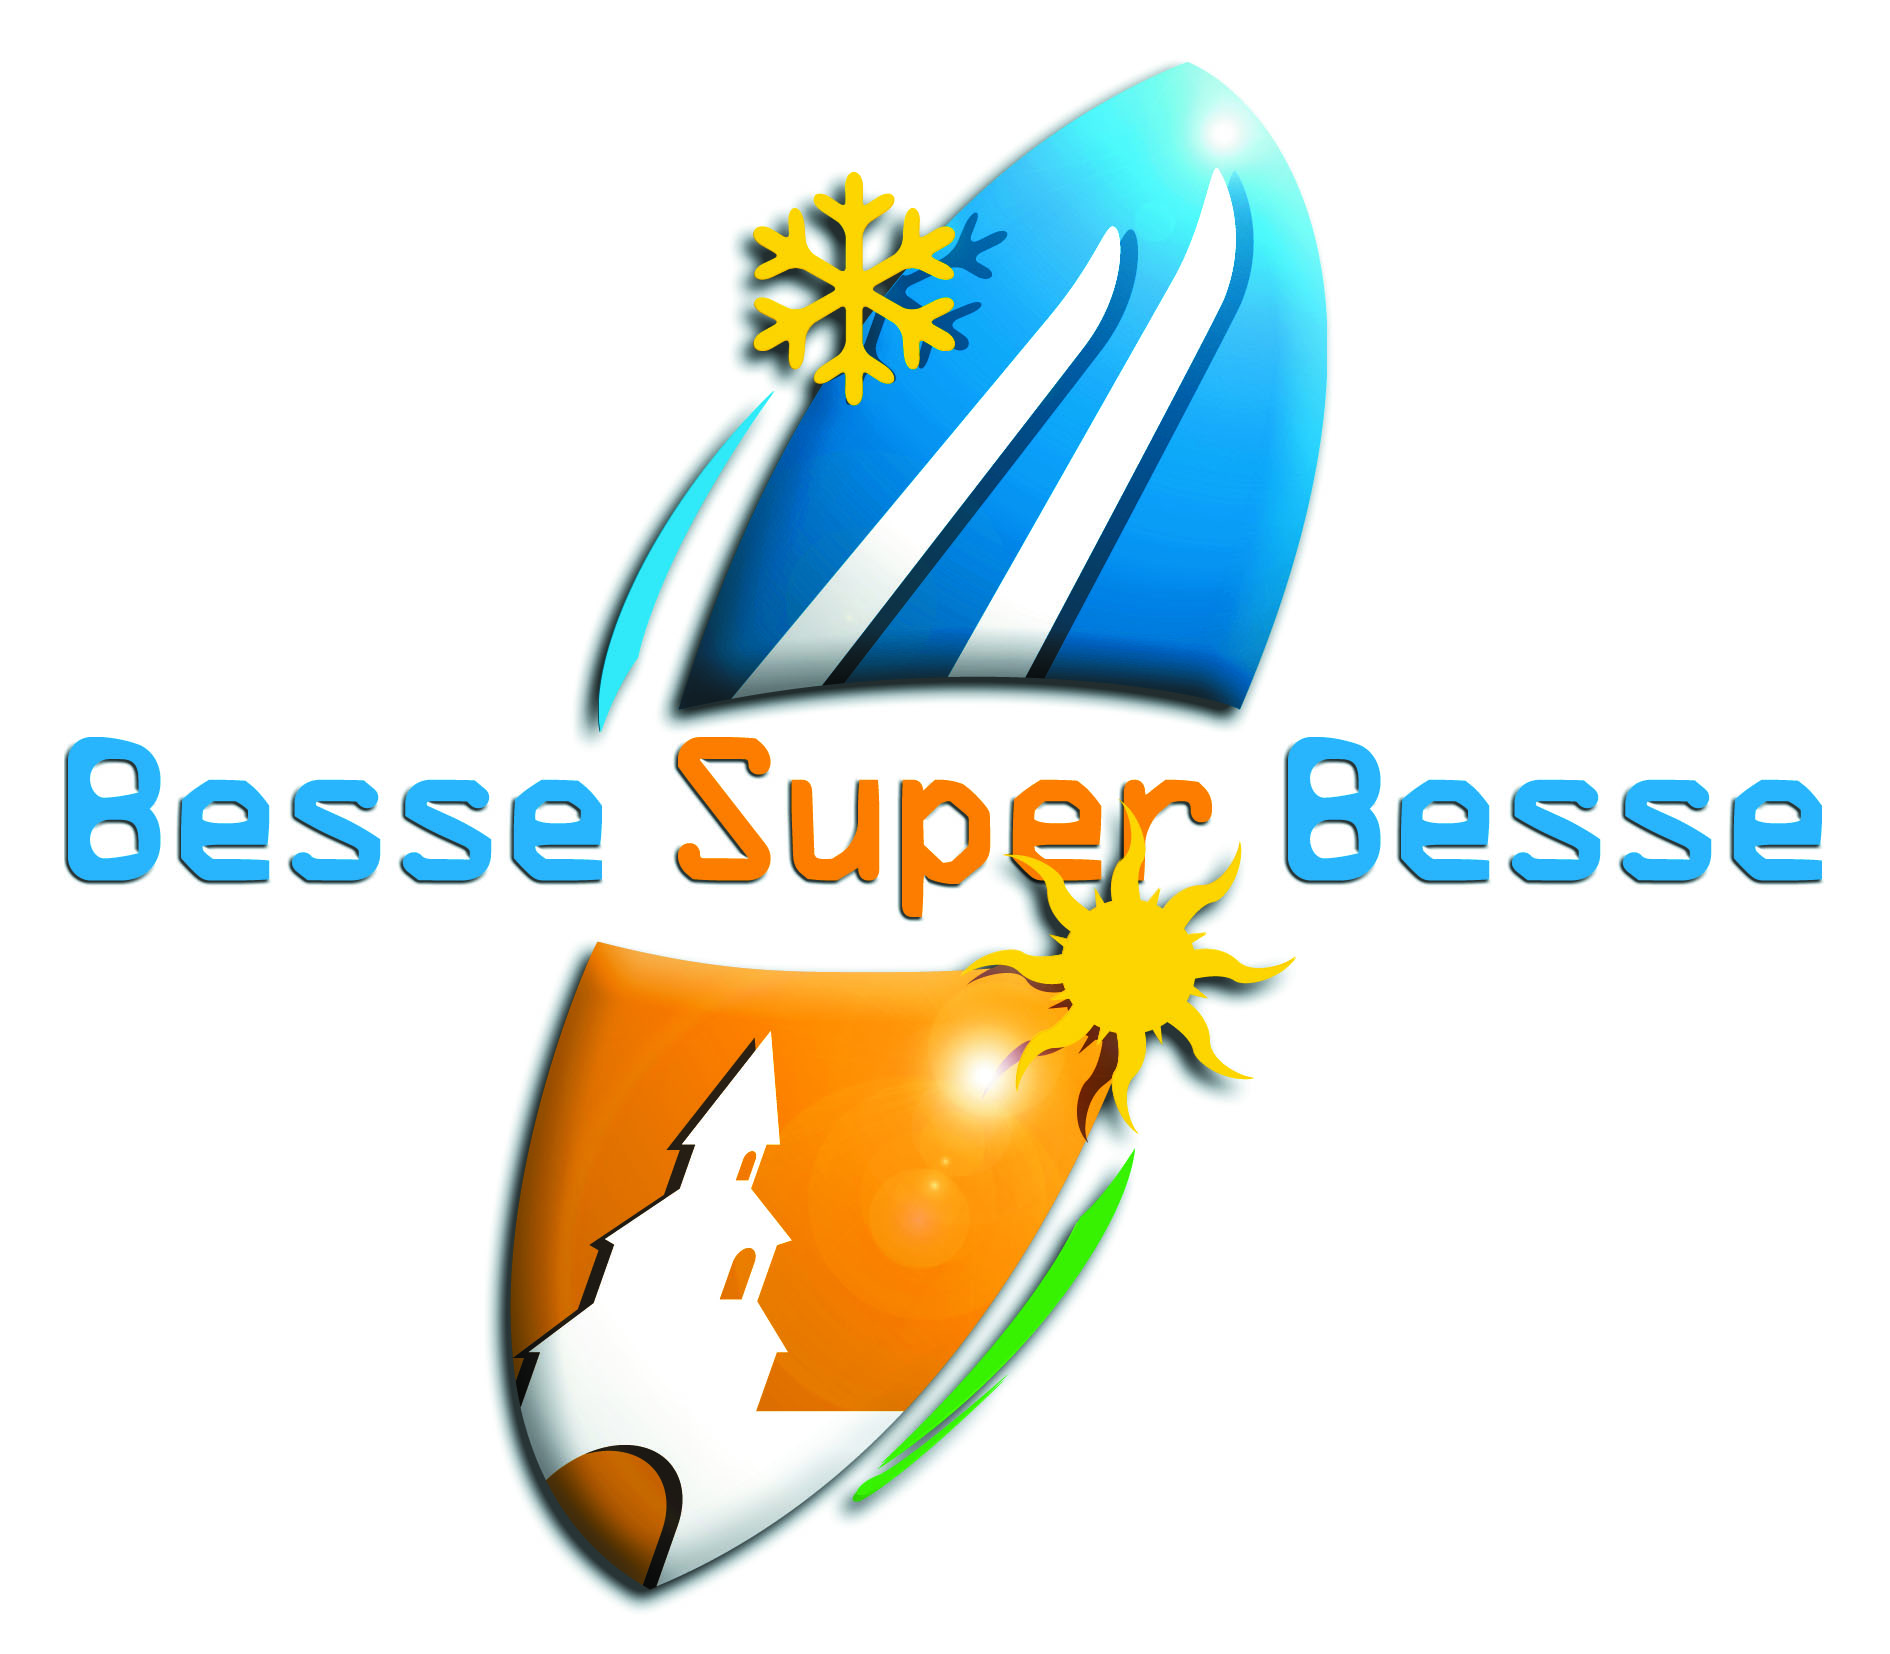 Besse Super-Besse - Massif du Sancy